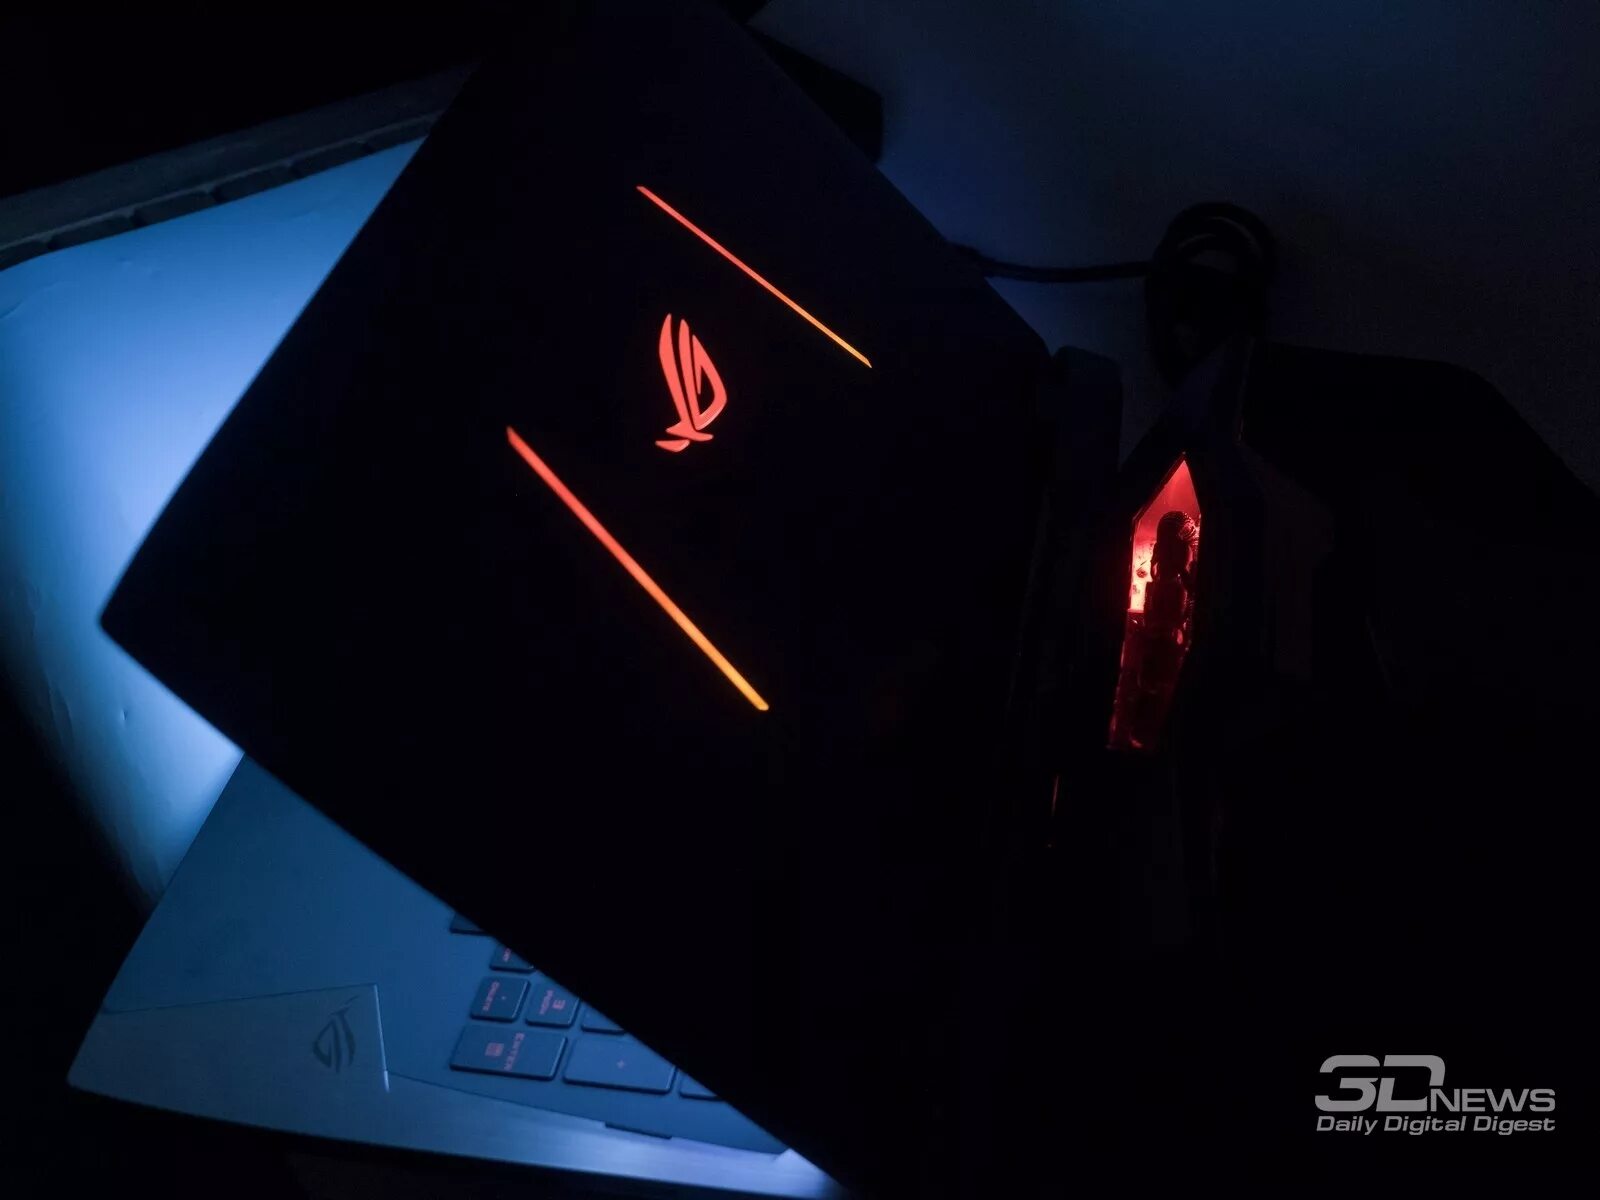 Ноутбук ASUS ROG подсветка. Ноутбук ASUS игровой с красной подсветкой. Асус игровой ноутбук с подсветкой красный. Асус ноутбук игровой 2020 с подсветкой.